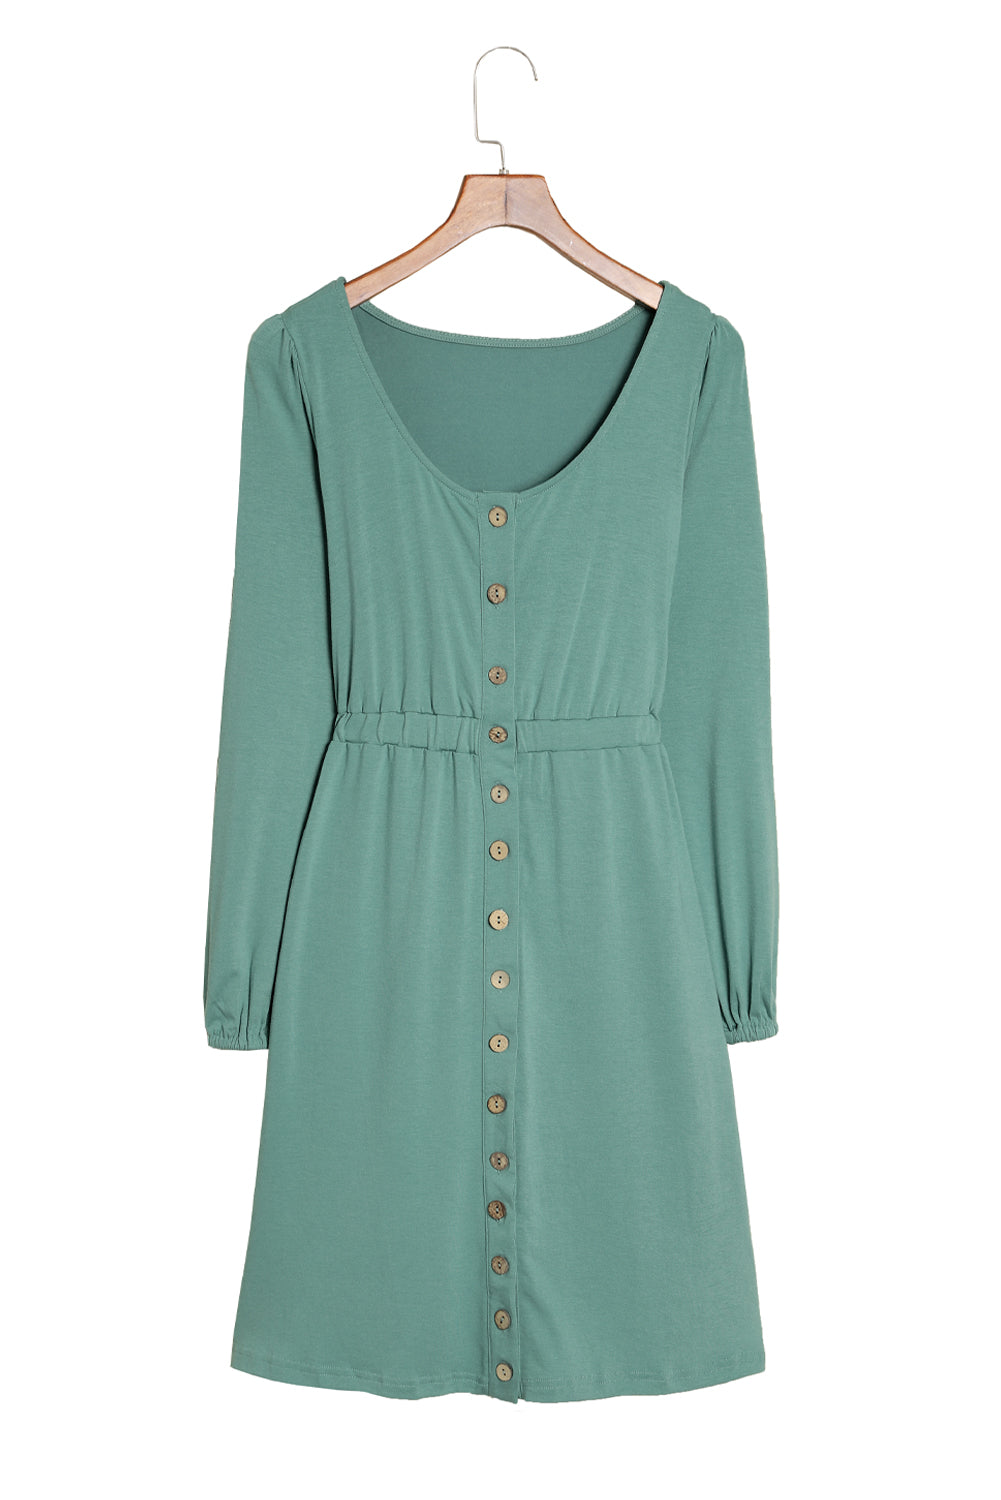 Green Button Up High Waist Long Sleeve Dress Midi Dresses JT's Designer Fashion